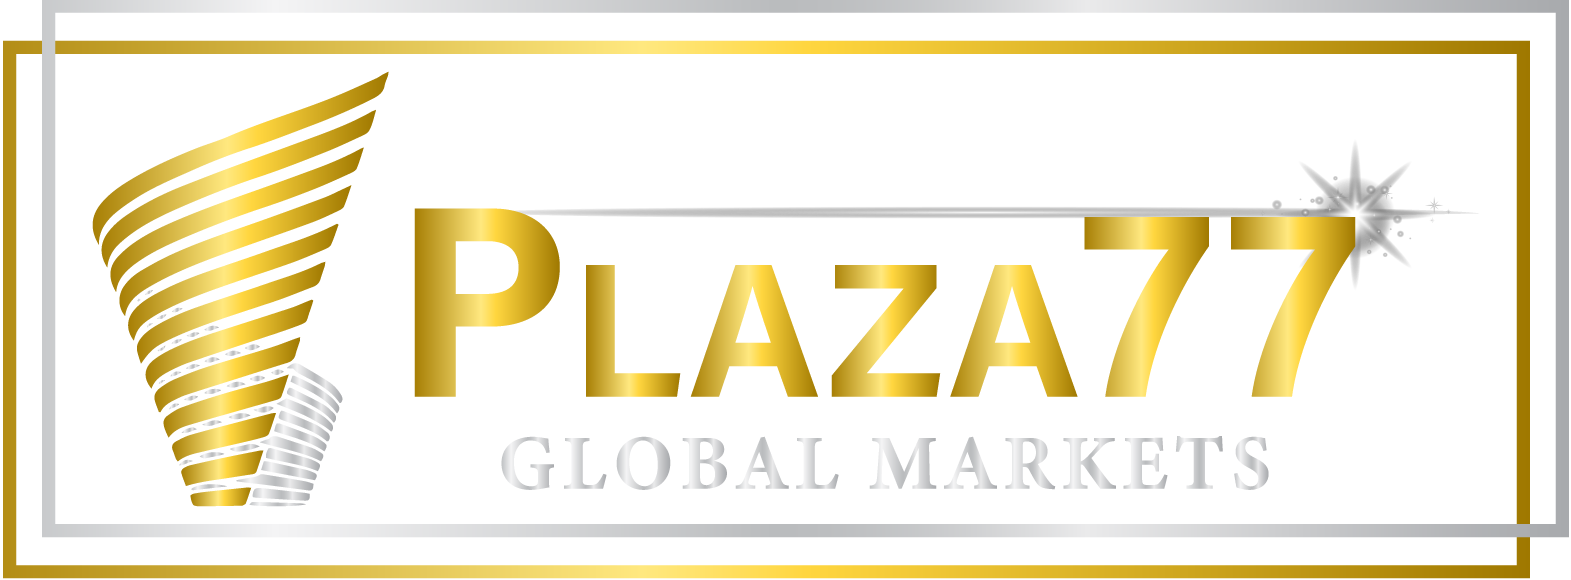 Plaza77 Global markets platforms  Logo